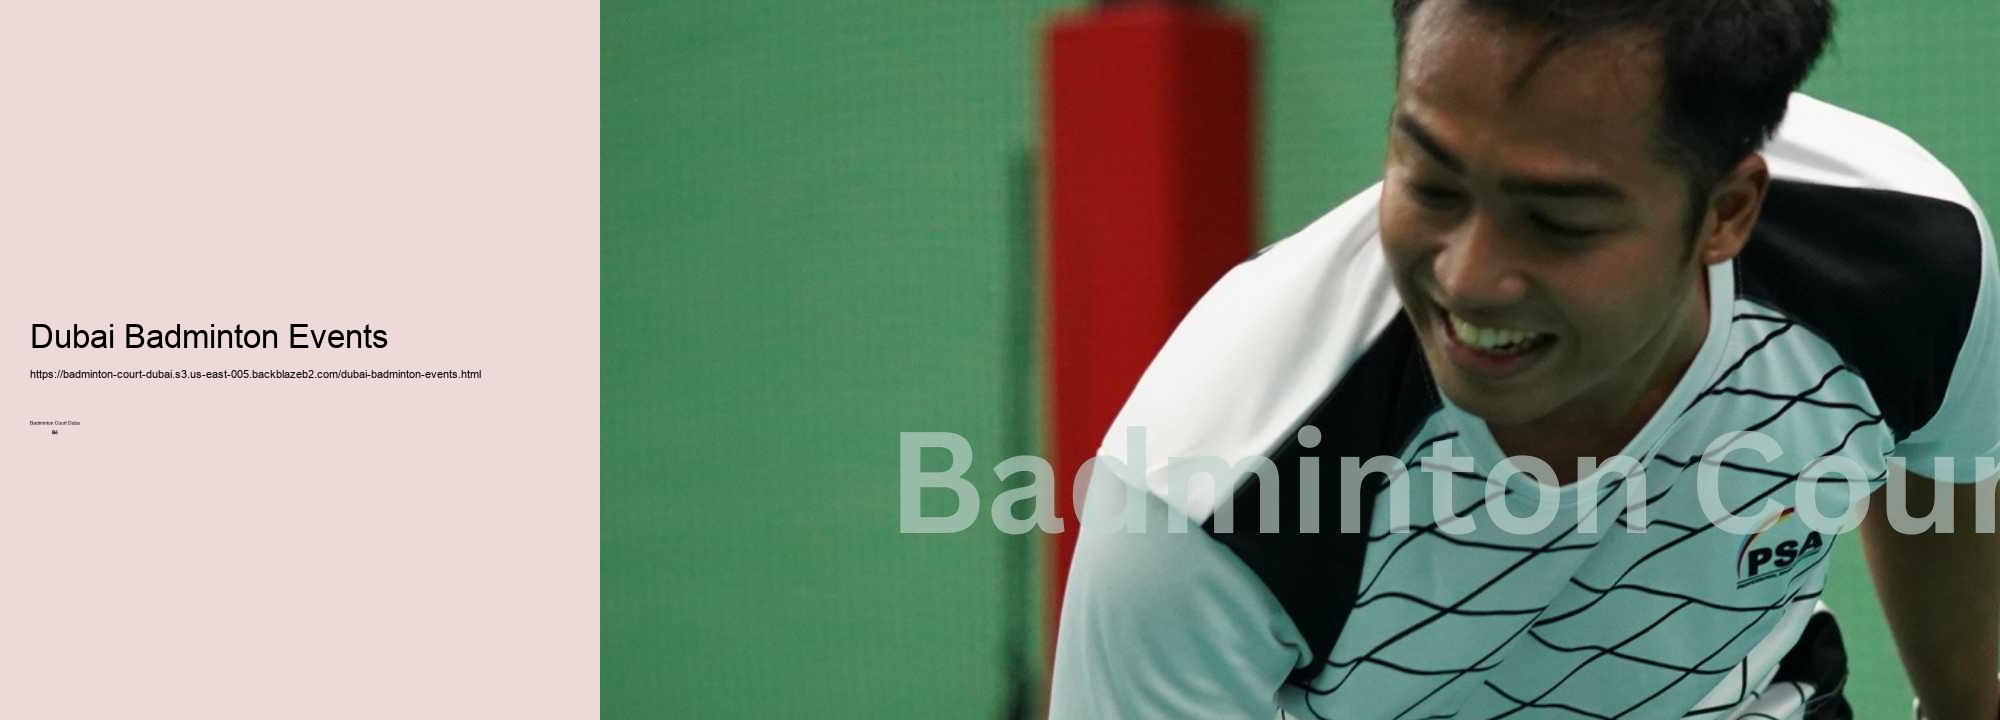 Dubai Badminton Events